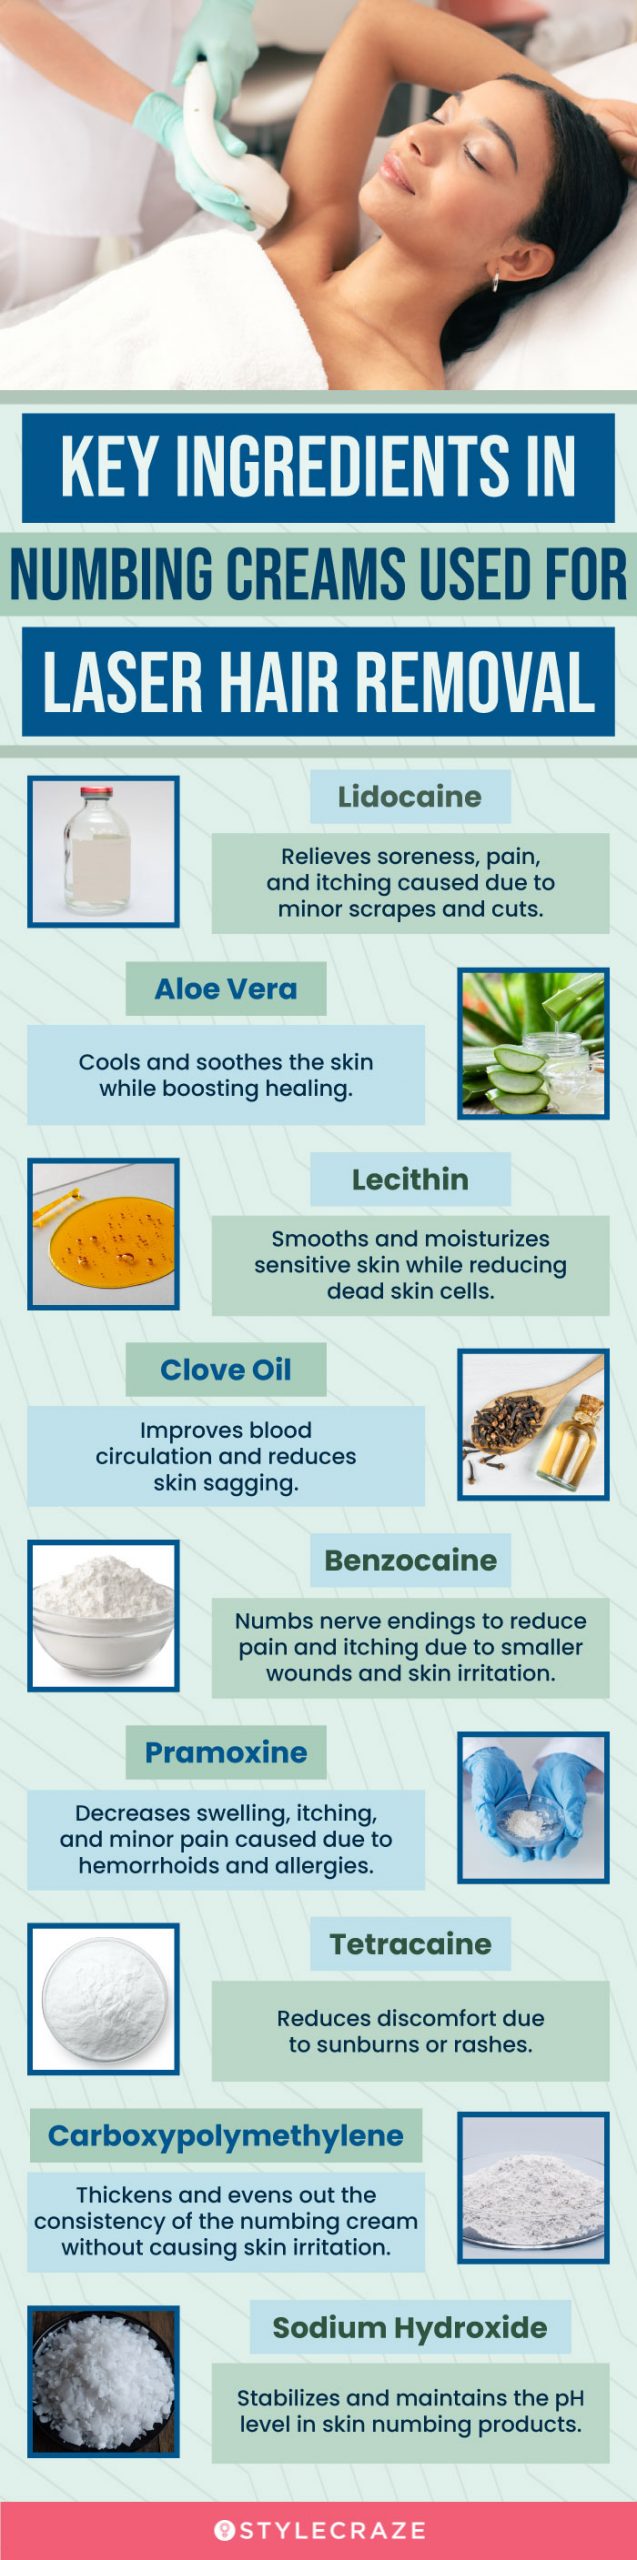 Key Ingredients In Numbing Creams (infographic)